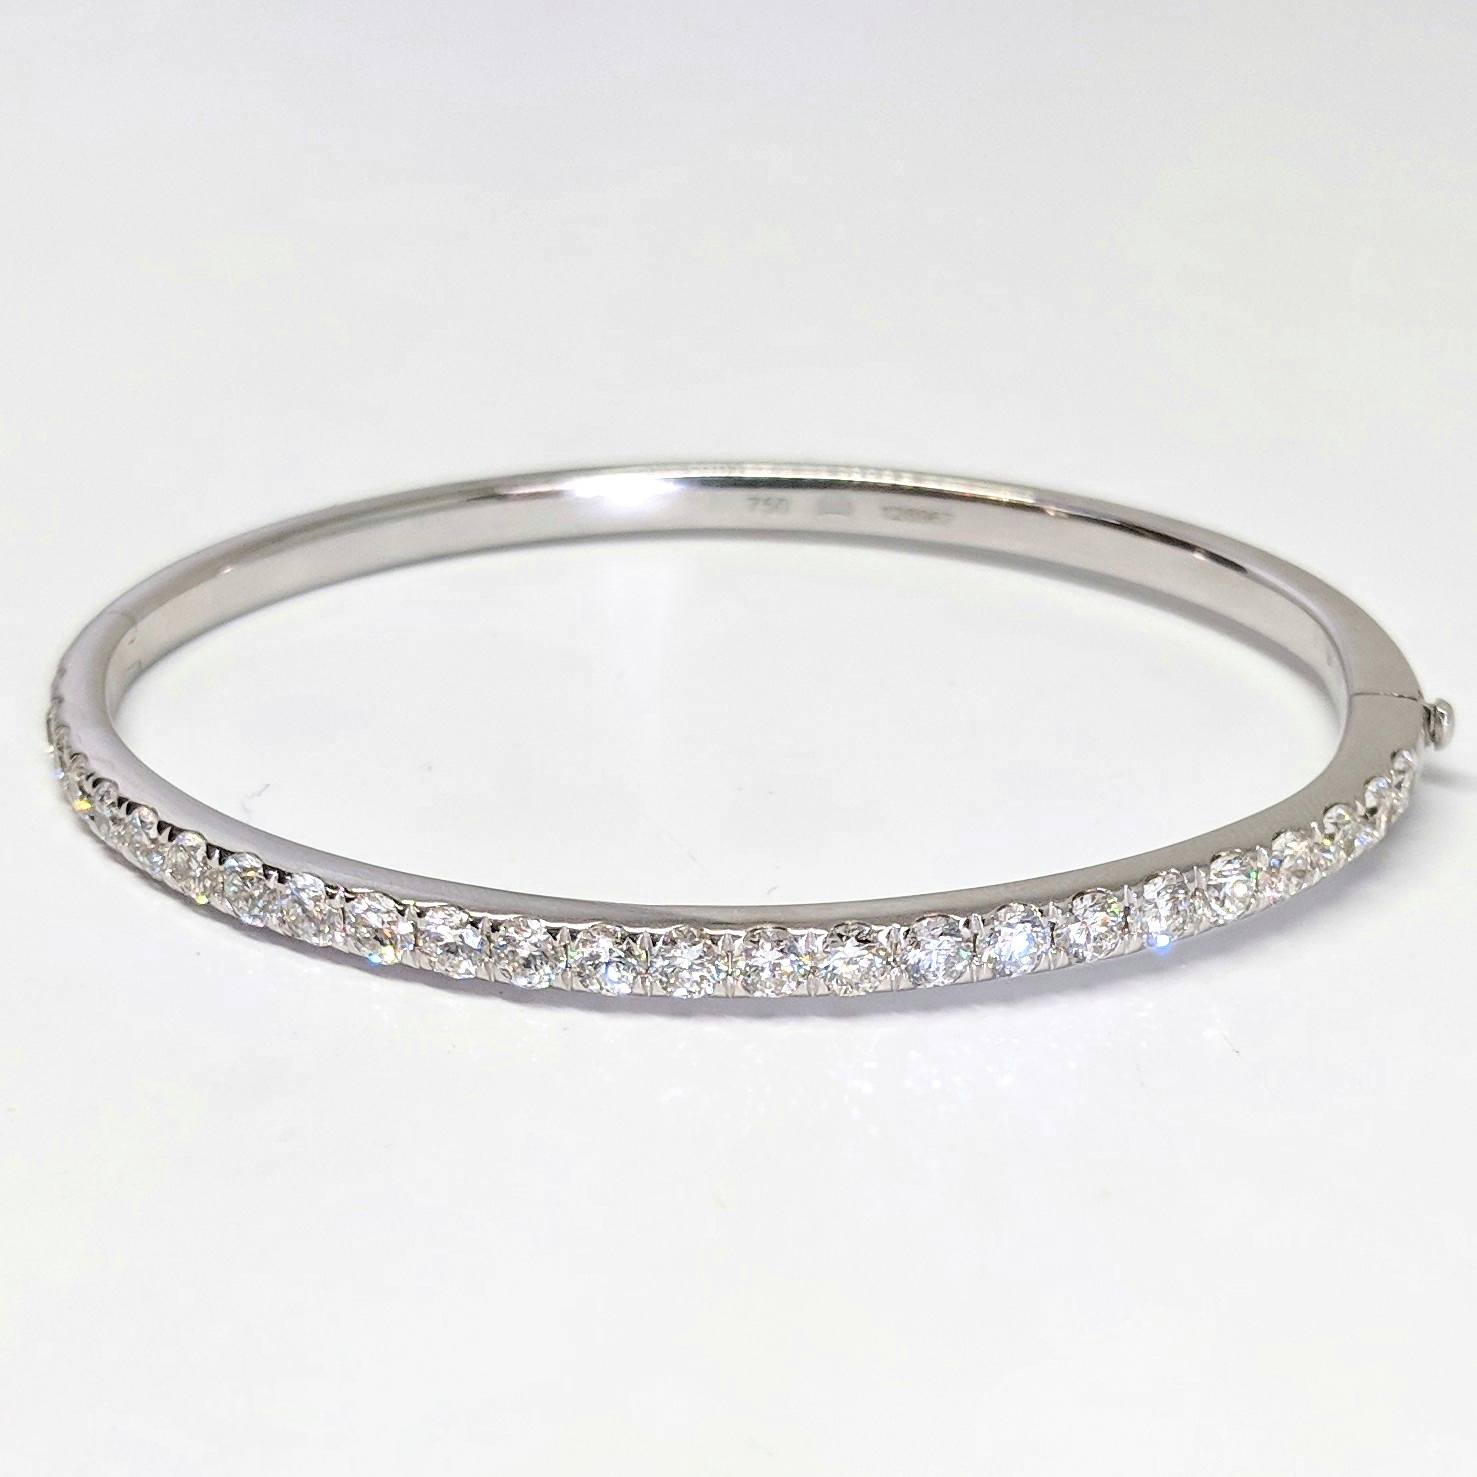 Hinged White Gold and Diamond Bangle Bracelet | Von Bargen's Jewelry